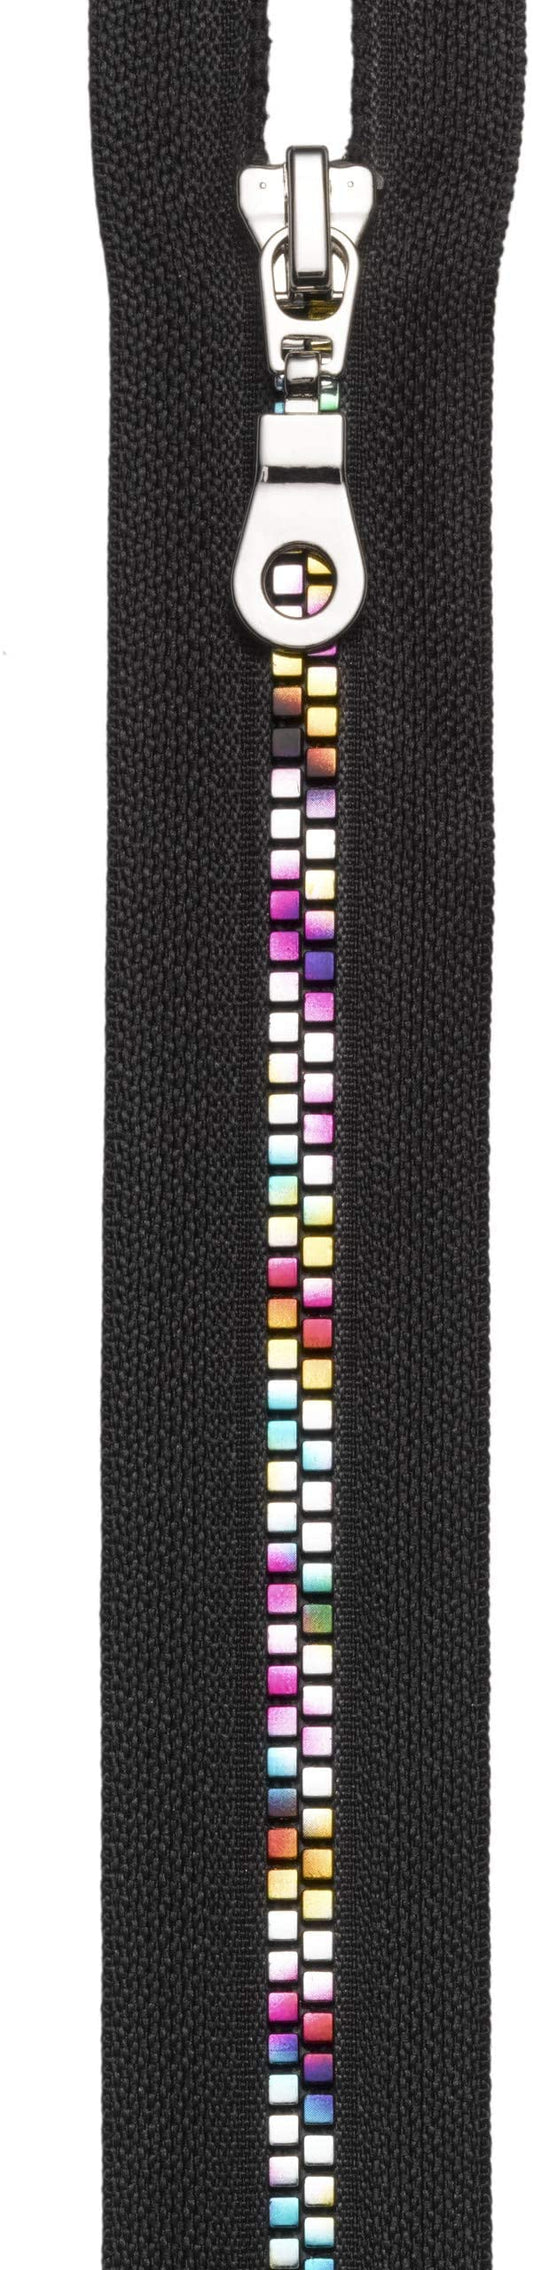 Prym Separating Zipper - 55cm Black/Rainbow